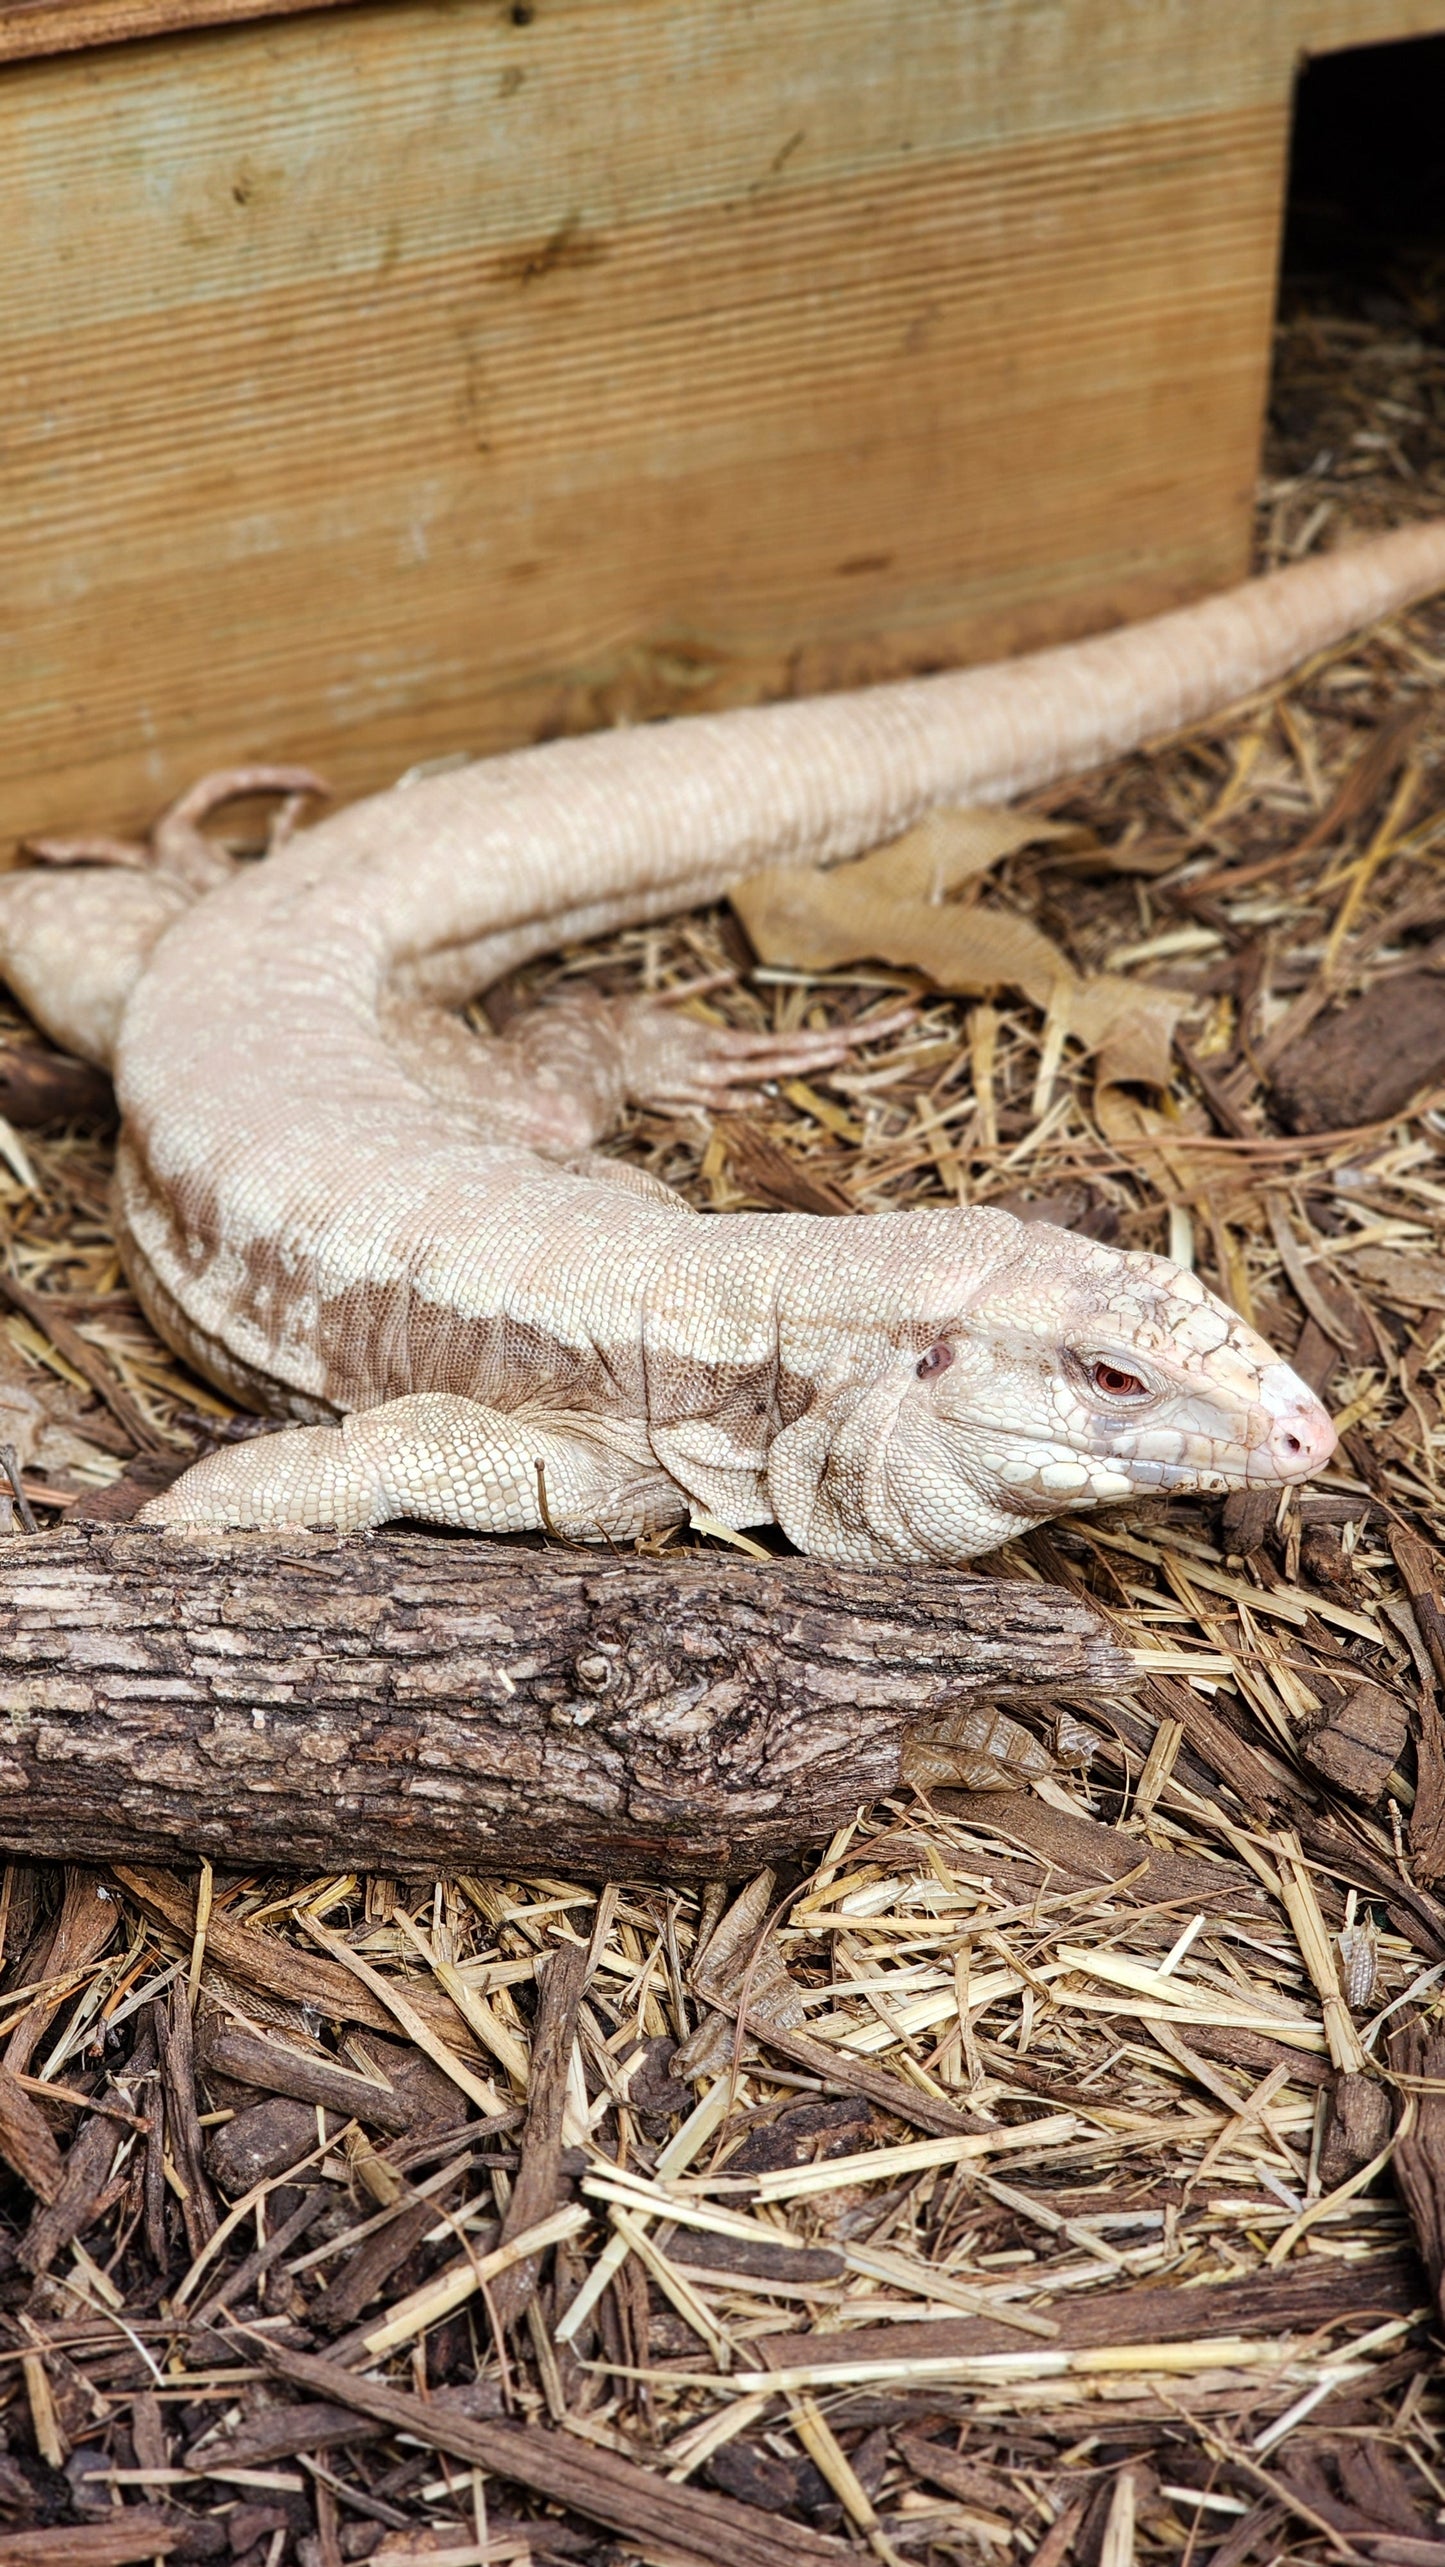 Female Albino Tegu